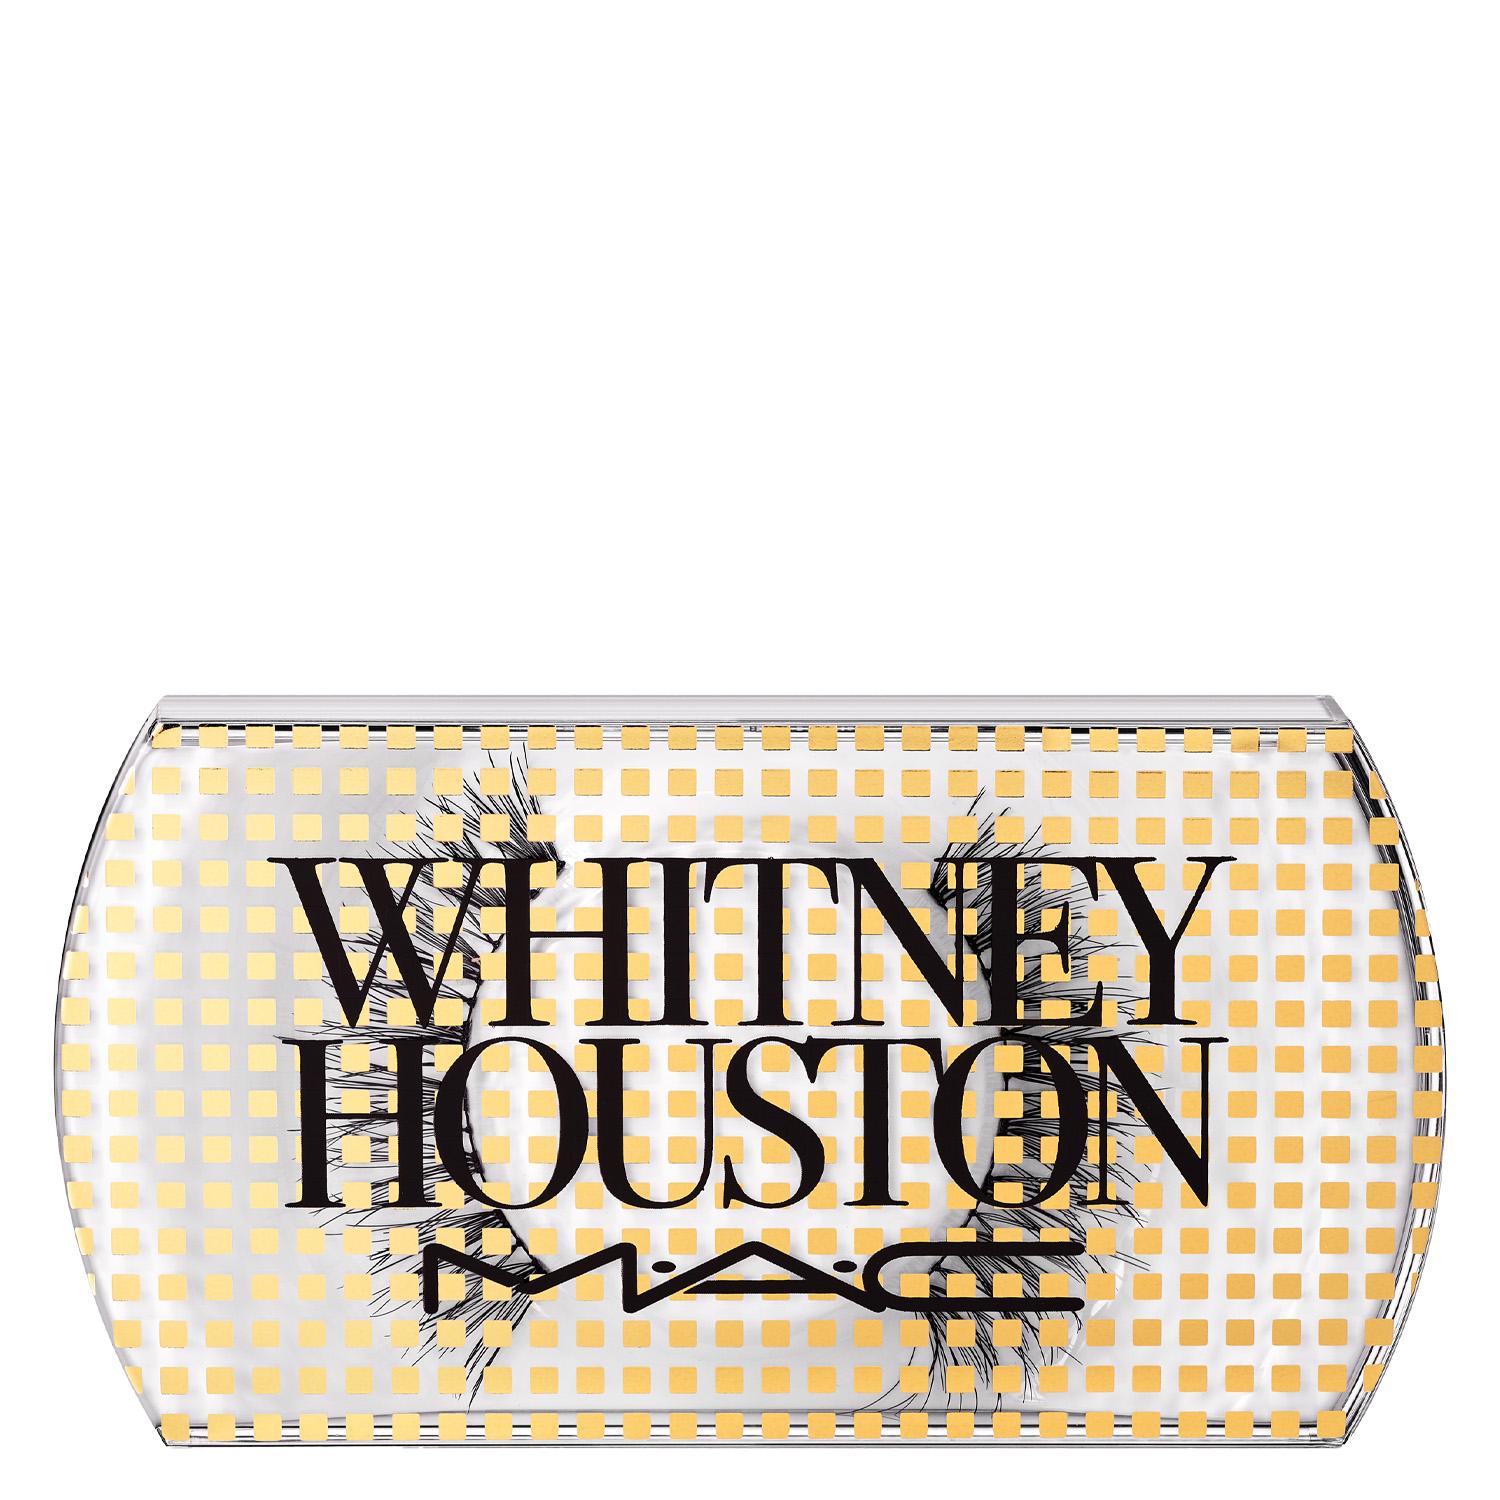 Whitney Houston Collection - Lashes